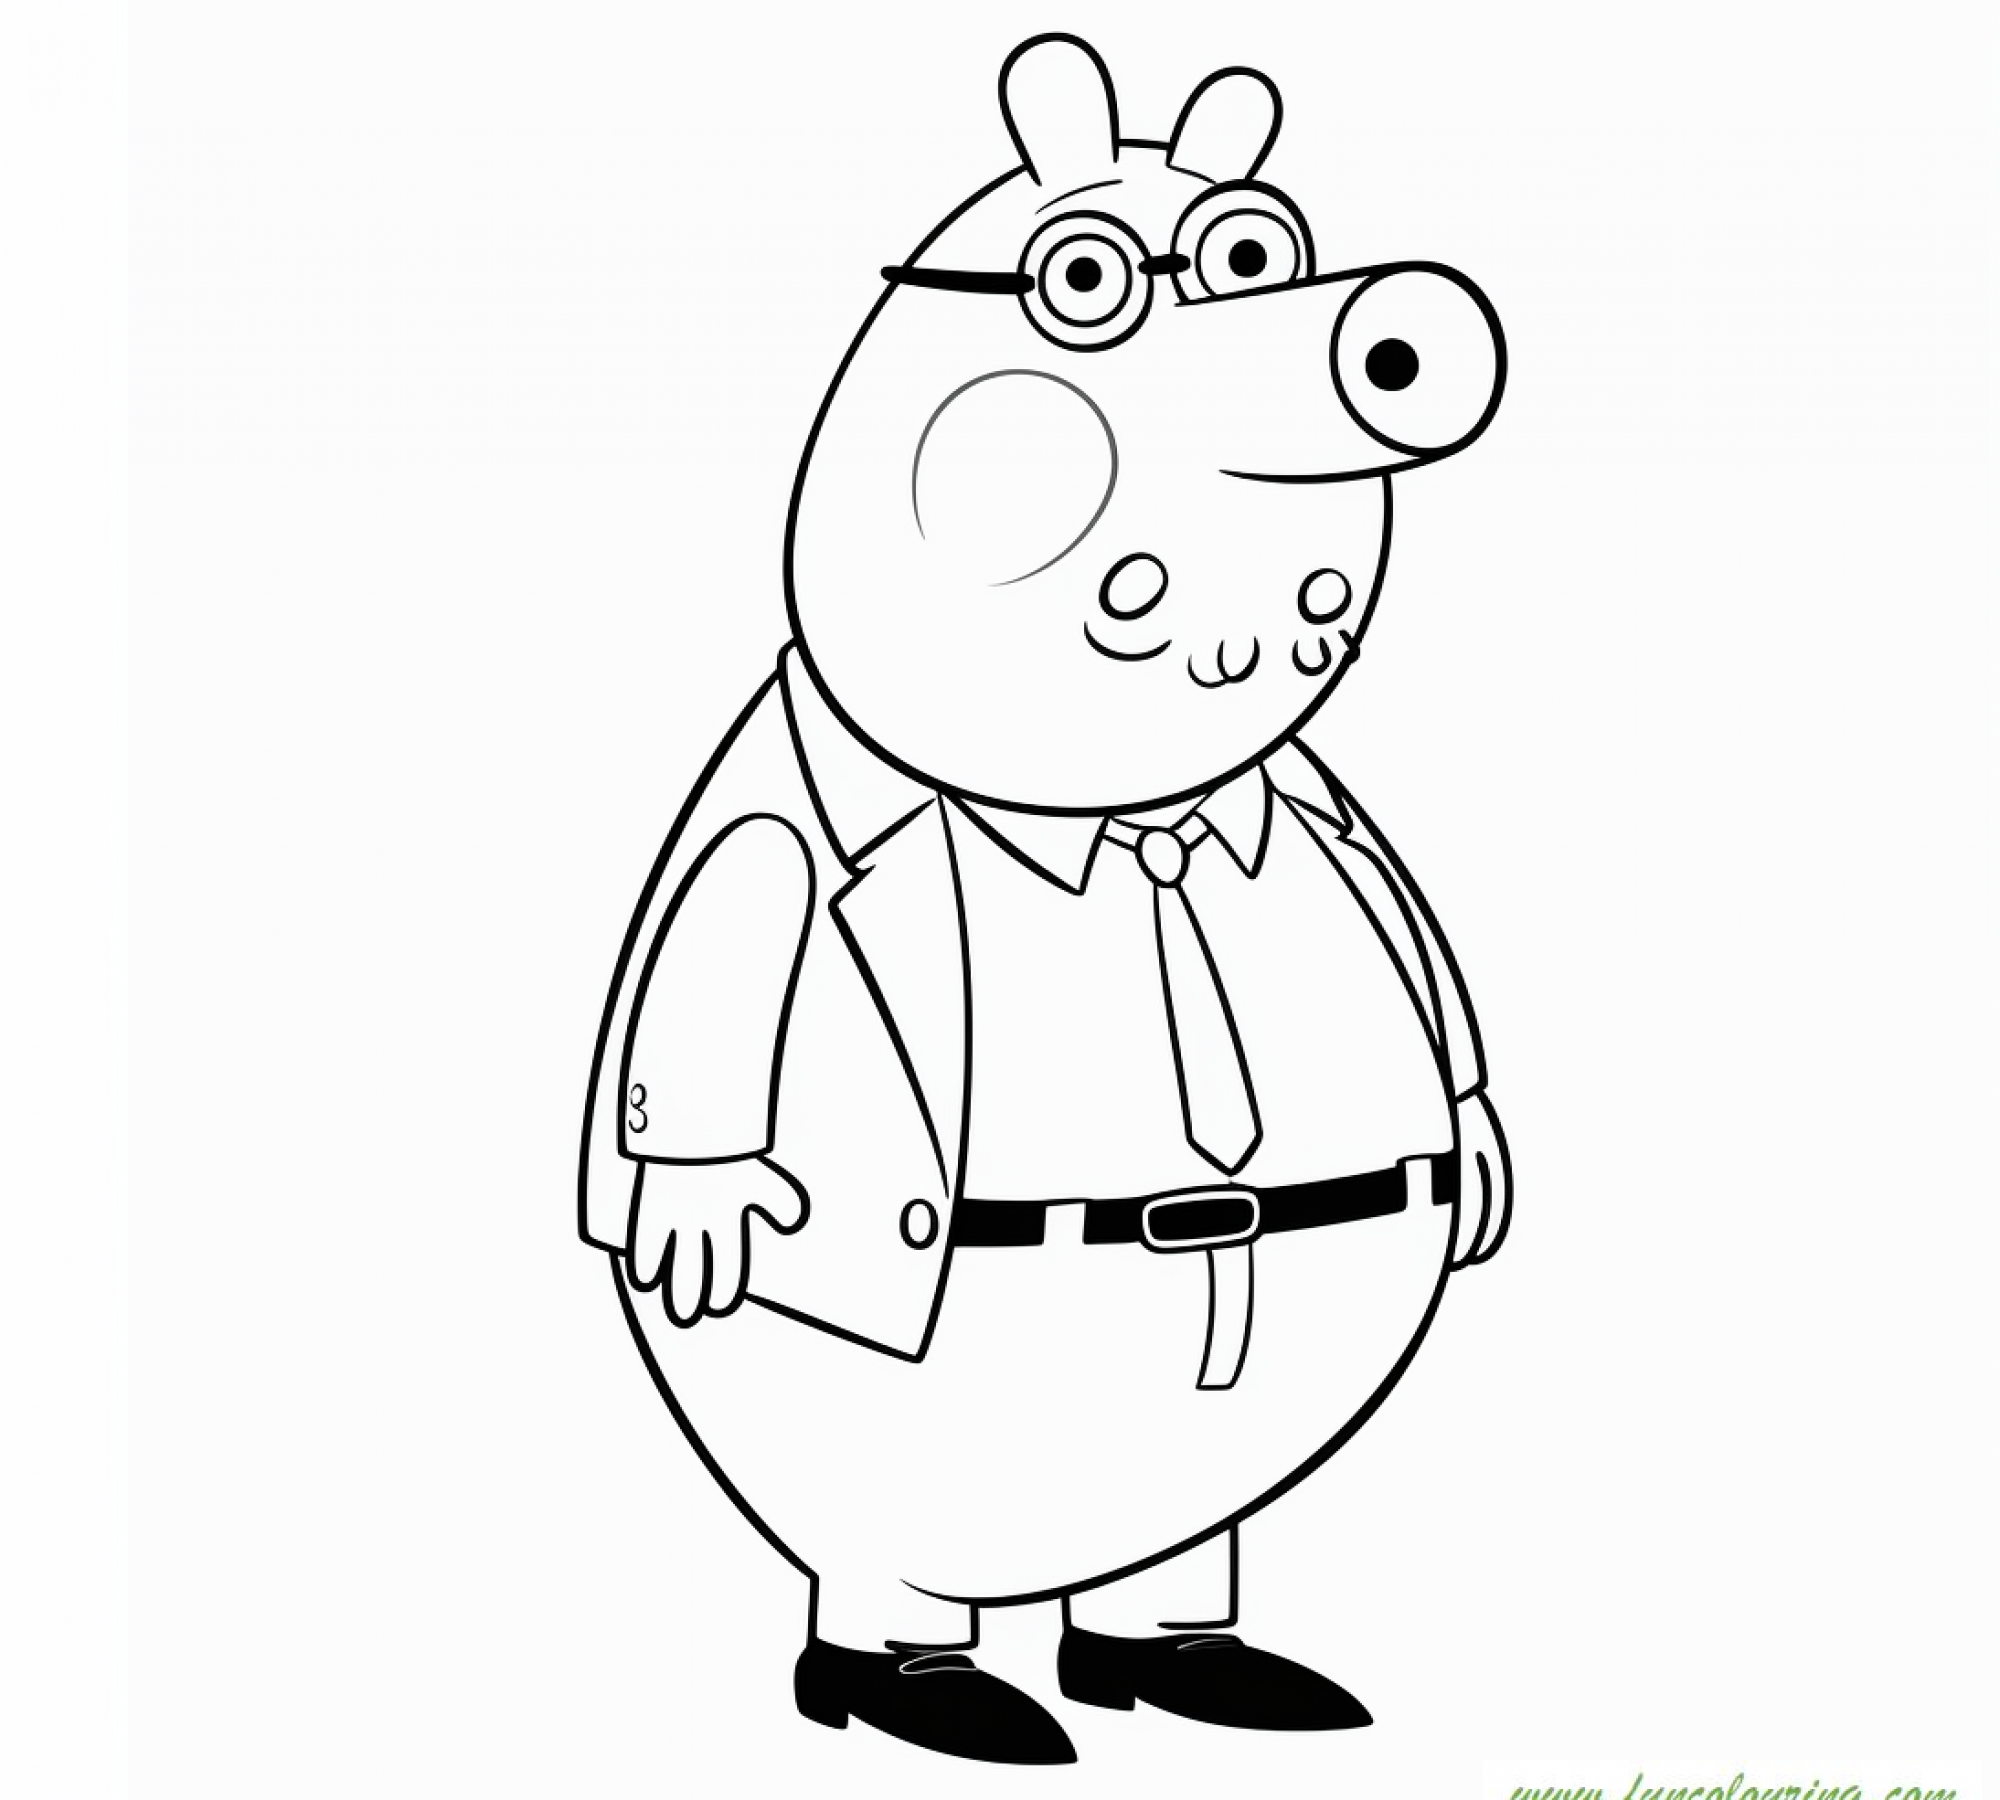 Free printable coloring page of Peppa Pig